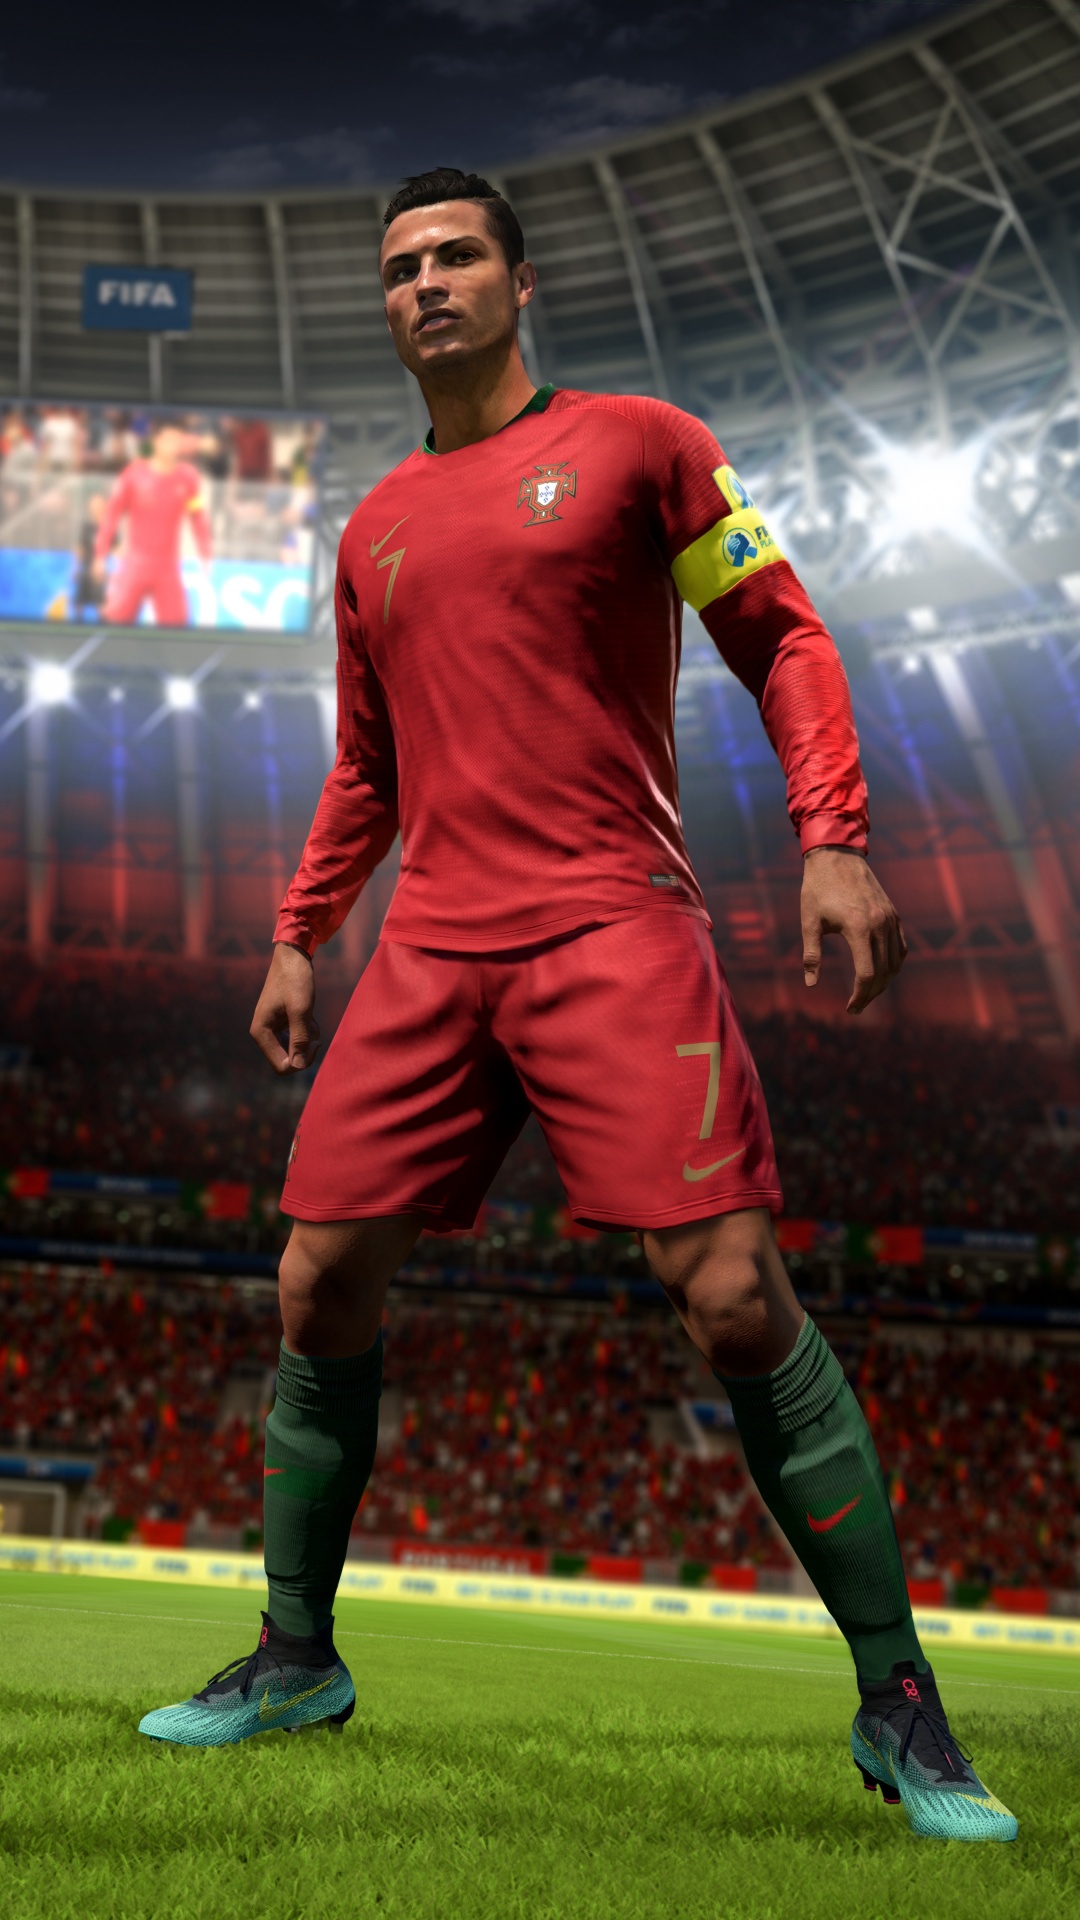 Fifa 18, 2018 la Coupe du Monde, ea Sports, Electronic Arts, Playstation 4. Wallpaper in 1080x1920 Resolution